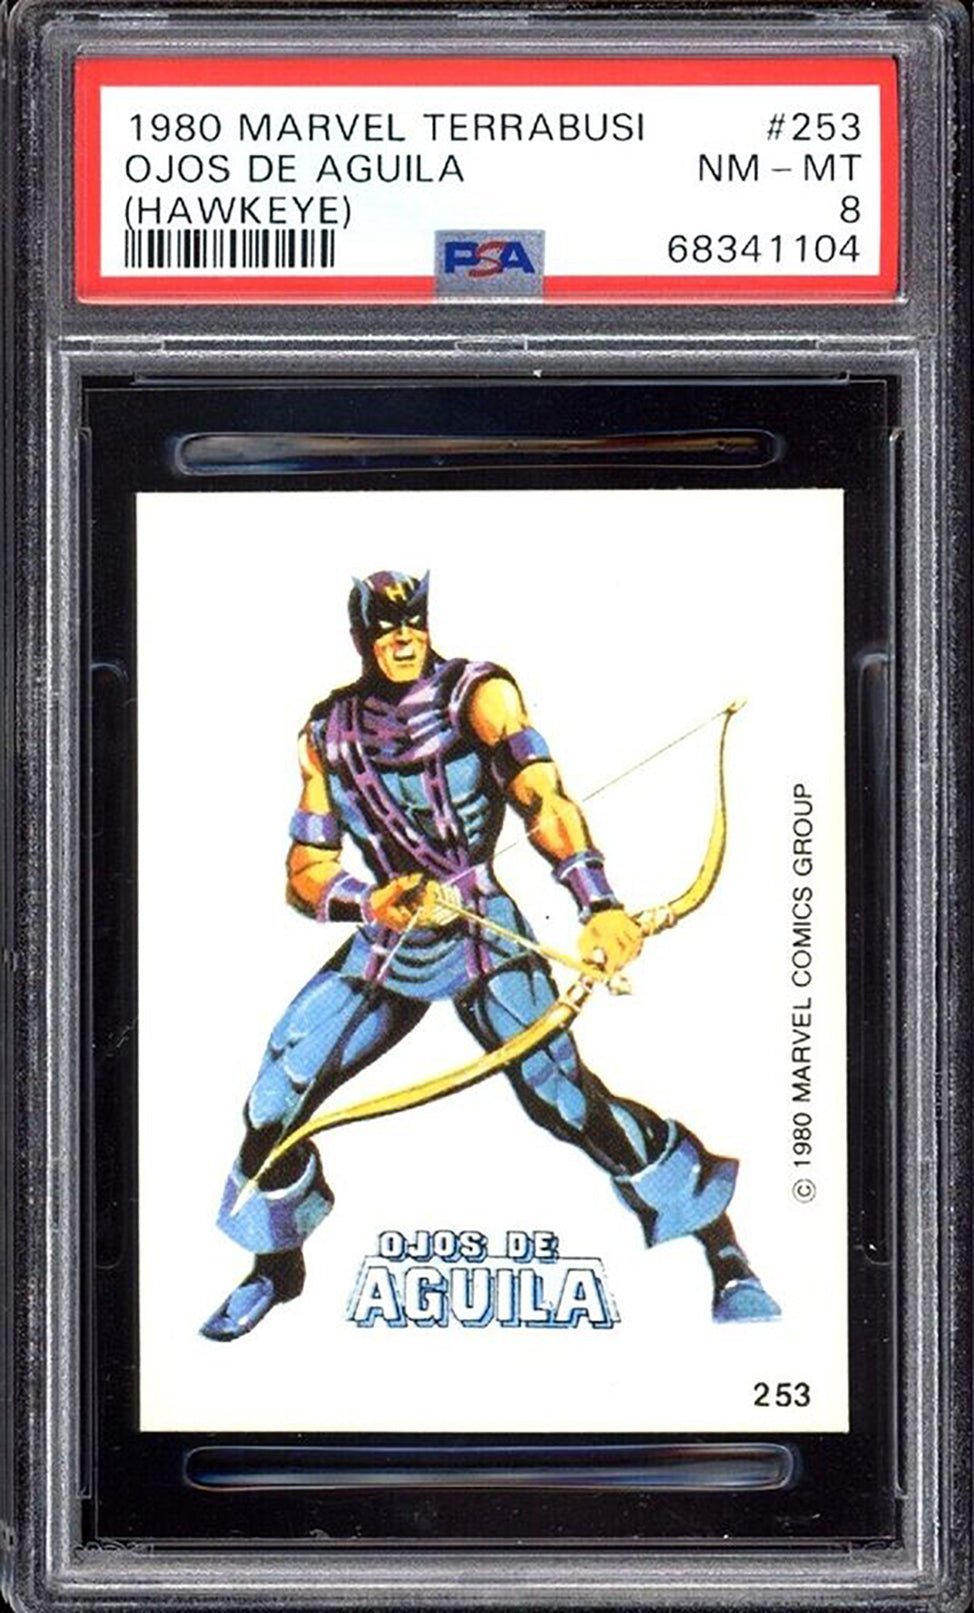 HAWKEYE PSA 8 1980 Marvel Terrabusi Sticker #253 Ojos de Aguila Marvel Graded Cards Sticker - Hobby Gems